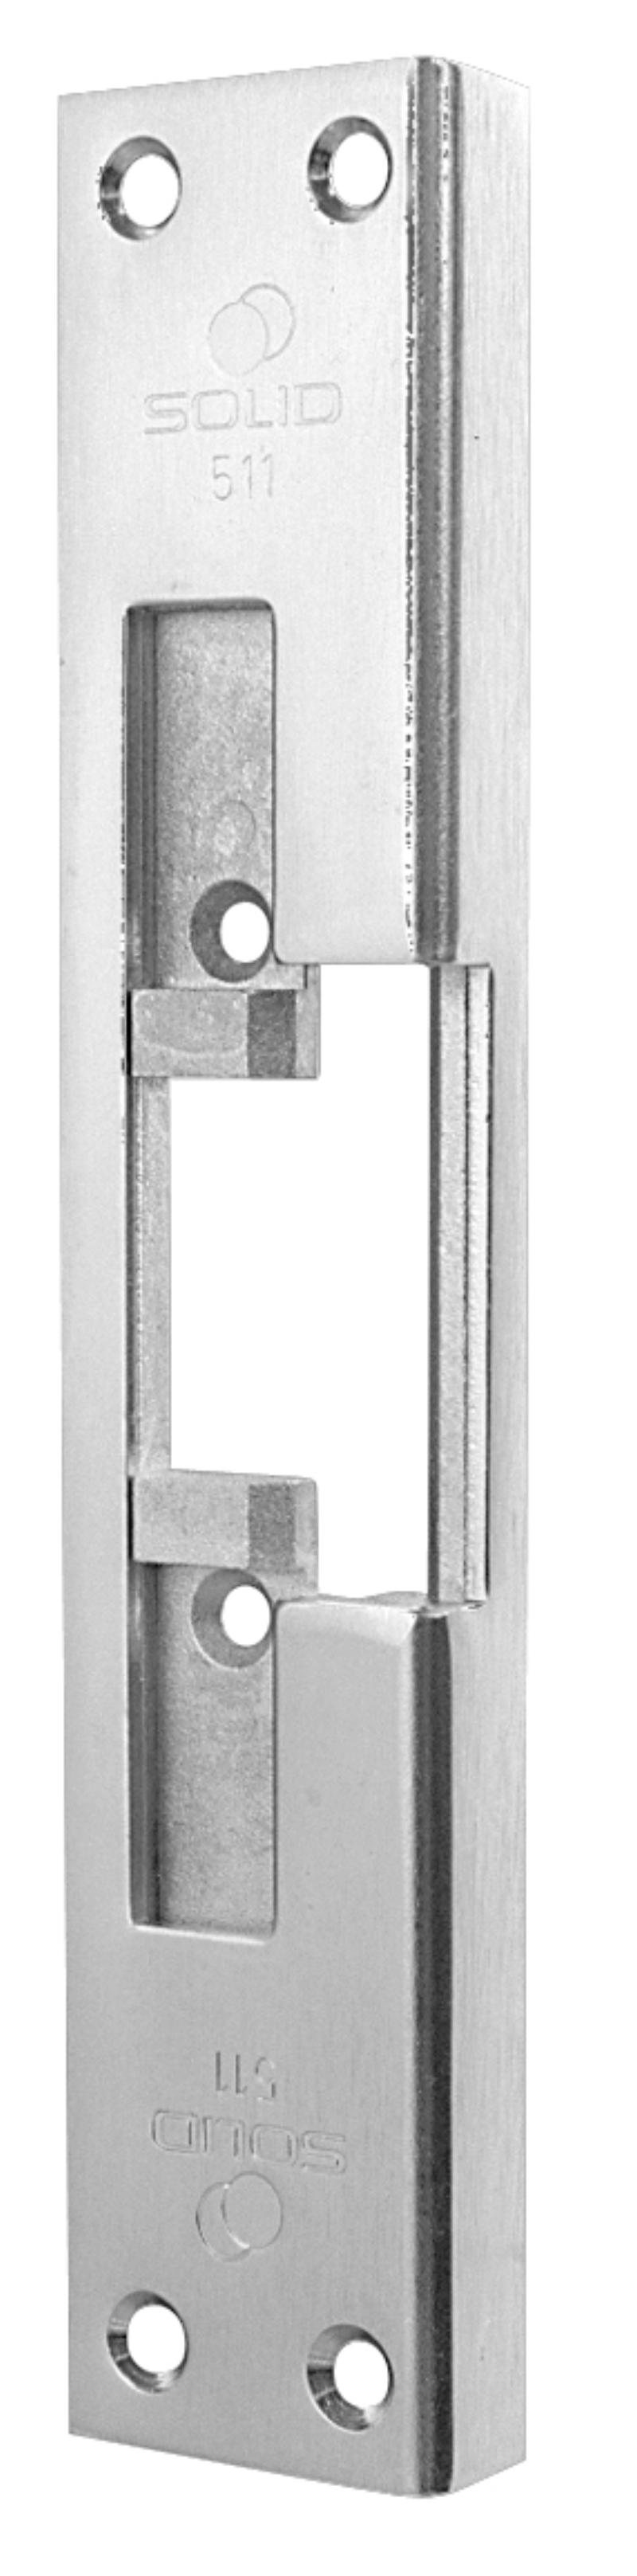 Solid stolpe 511 t/el-slutblik (971237)